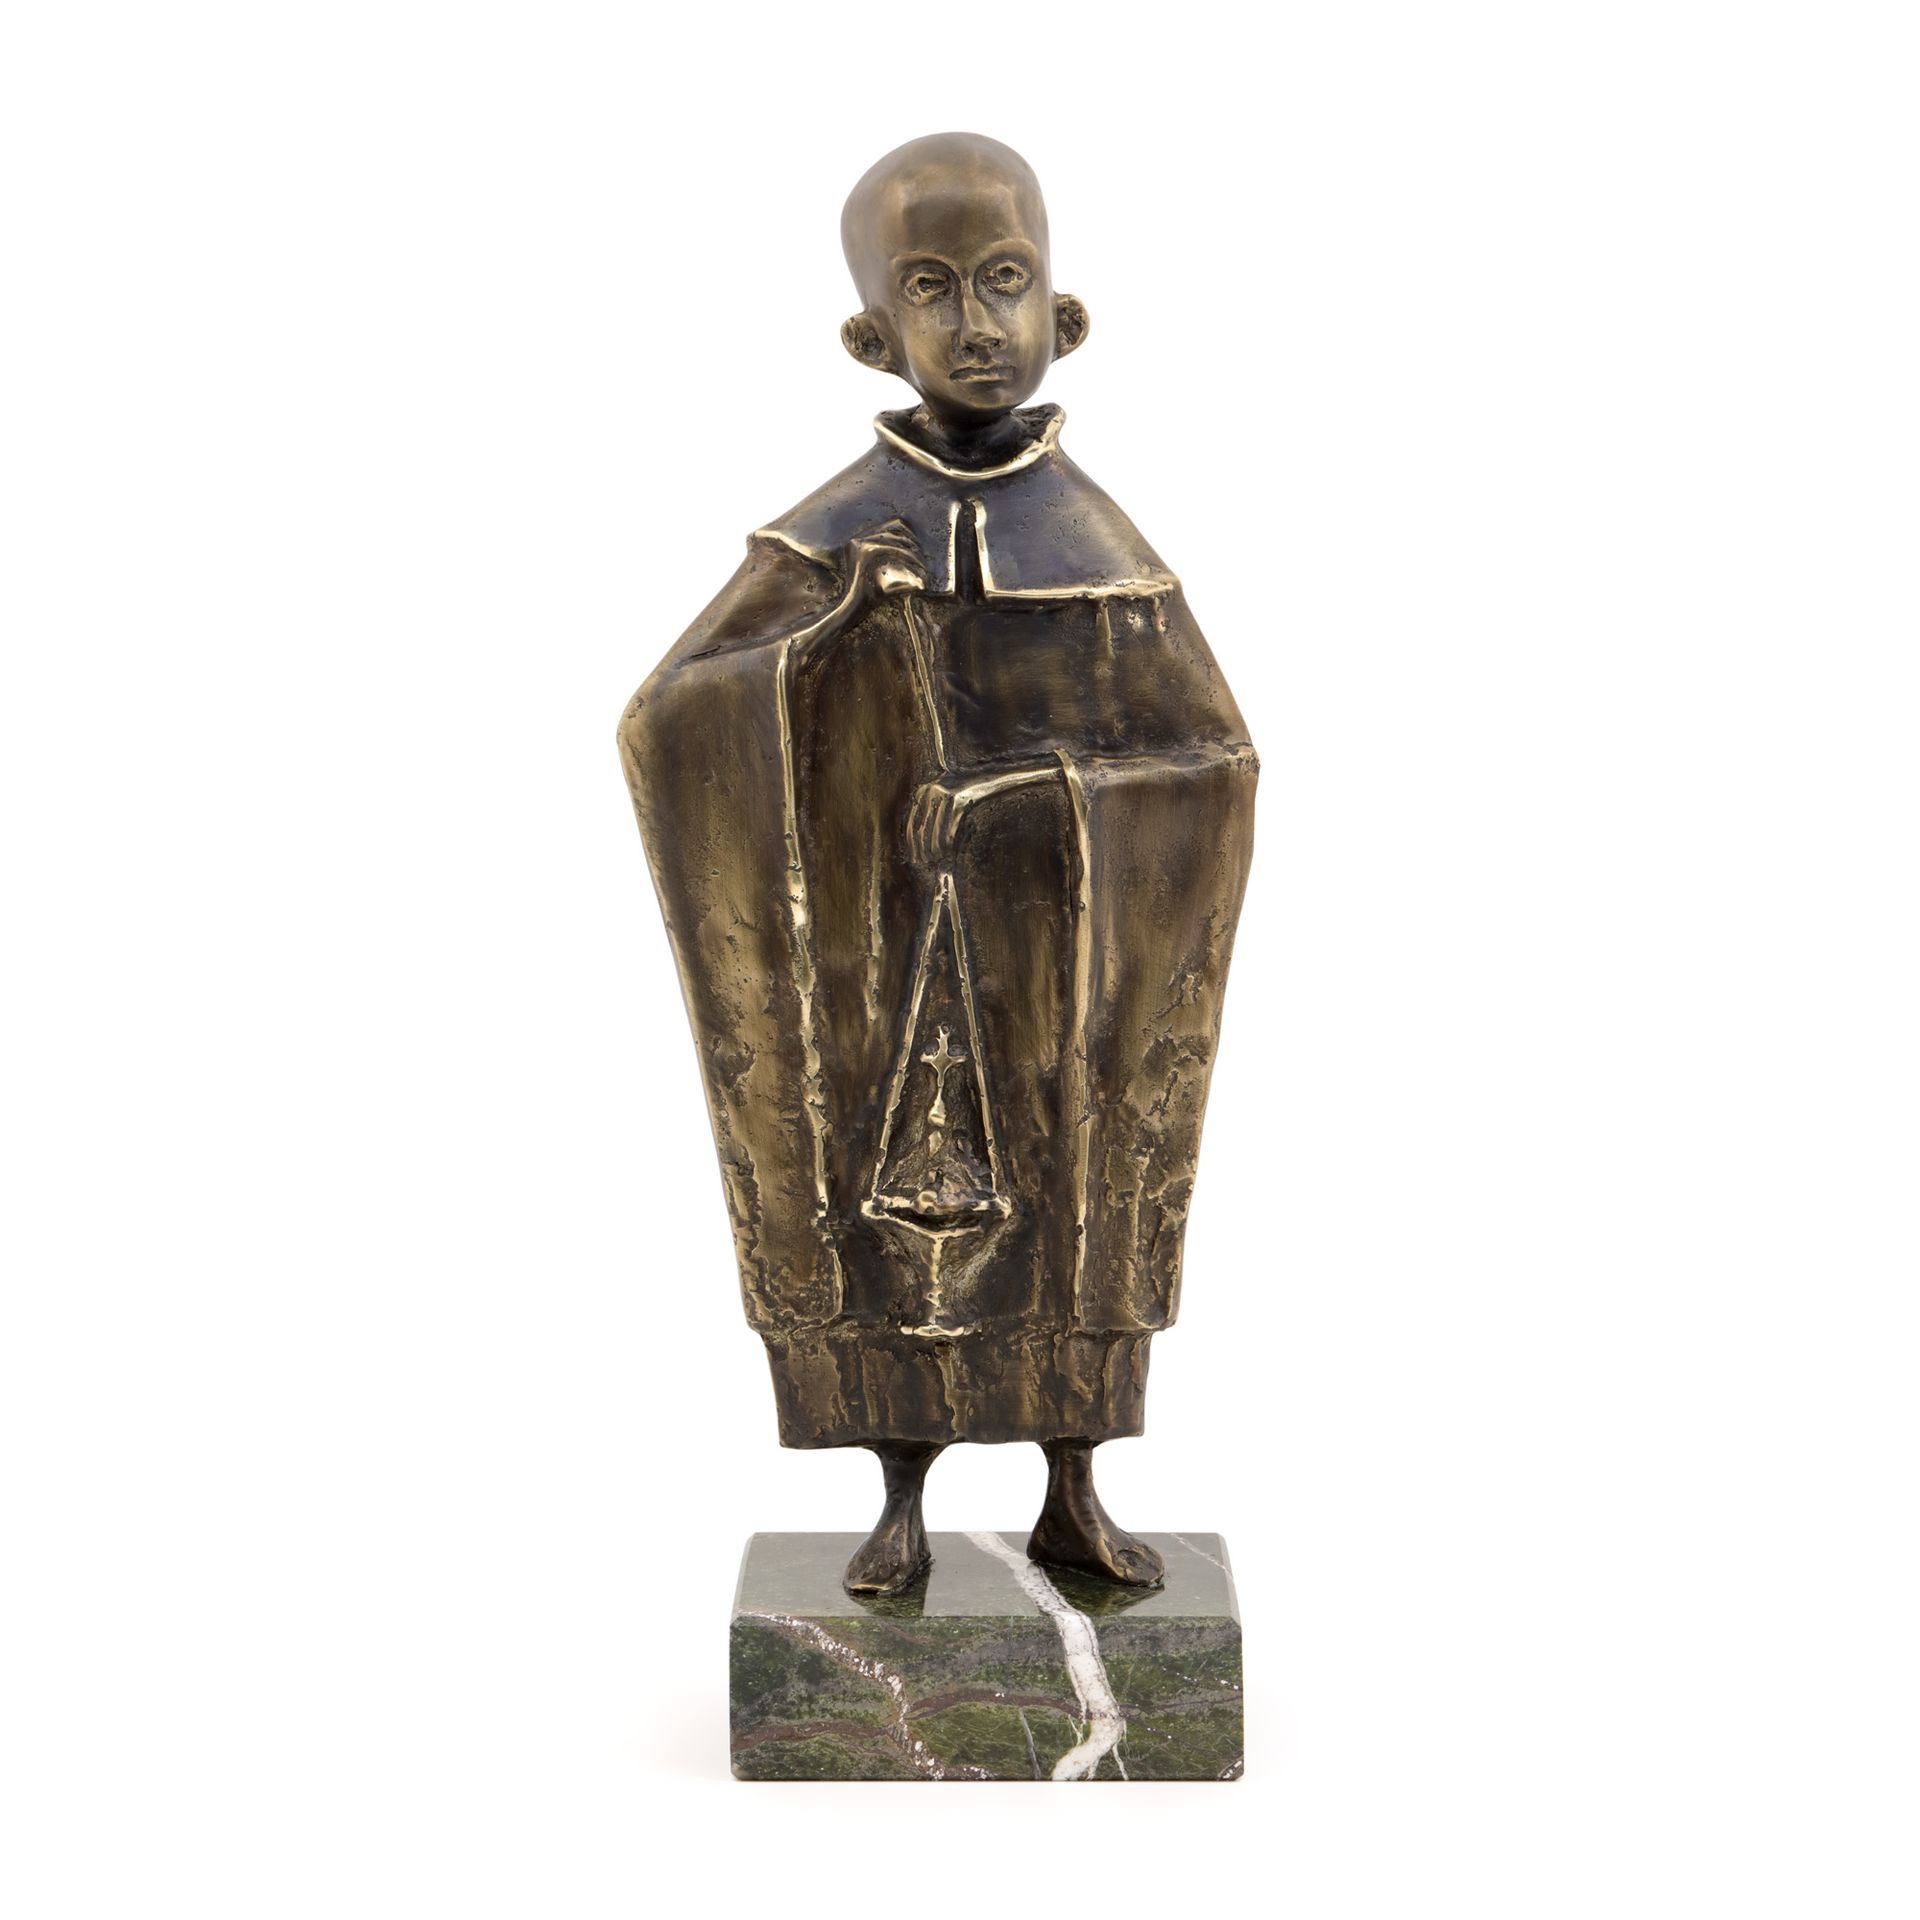 Ion Iancuţ, Altar Boy (Acolyte) 青铜，34 x 16 x 6，雕塑底部签名，背面为 "IANCUT"